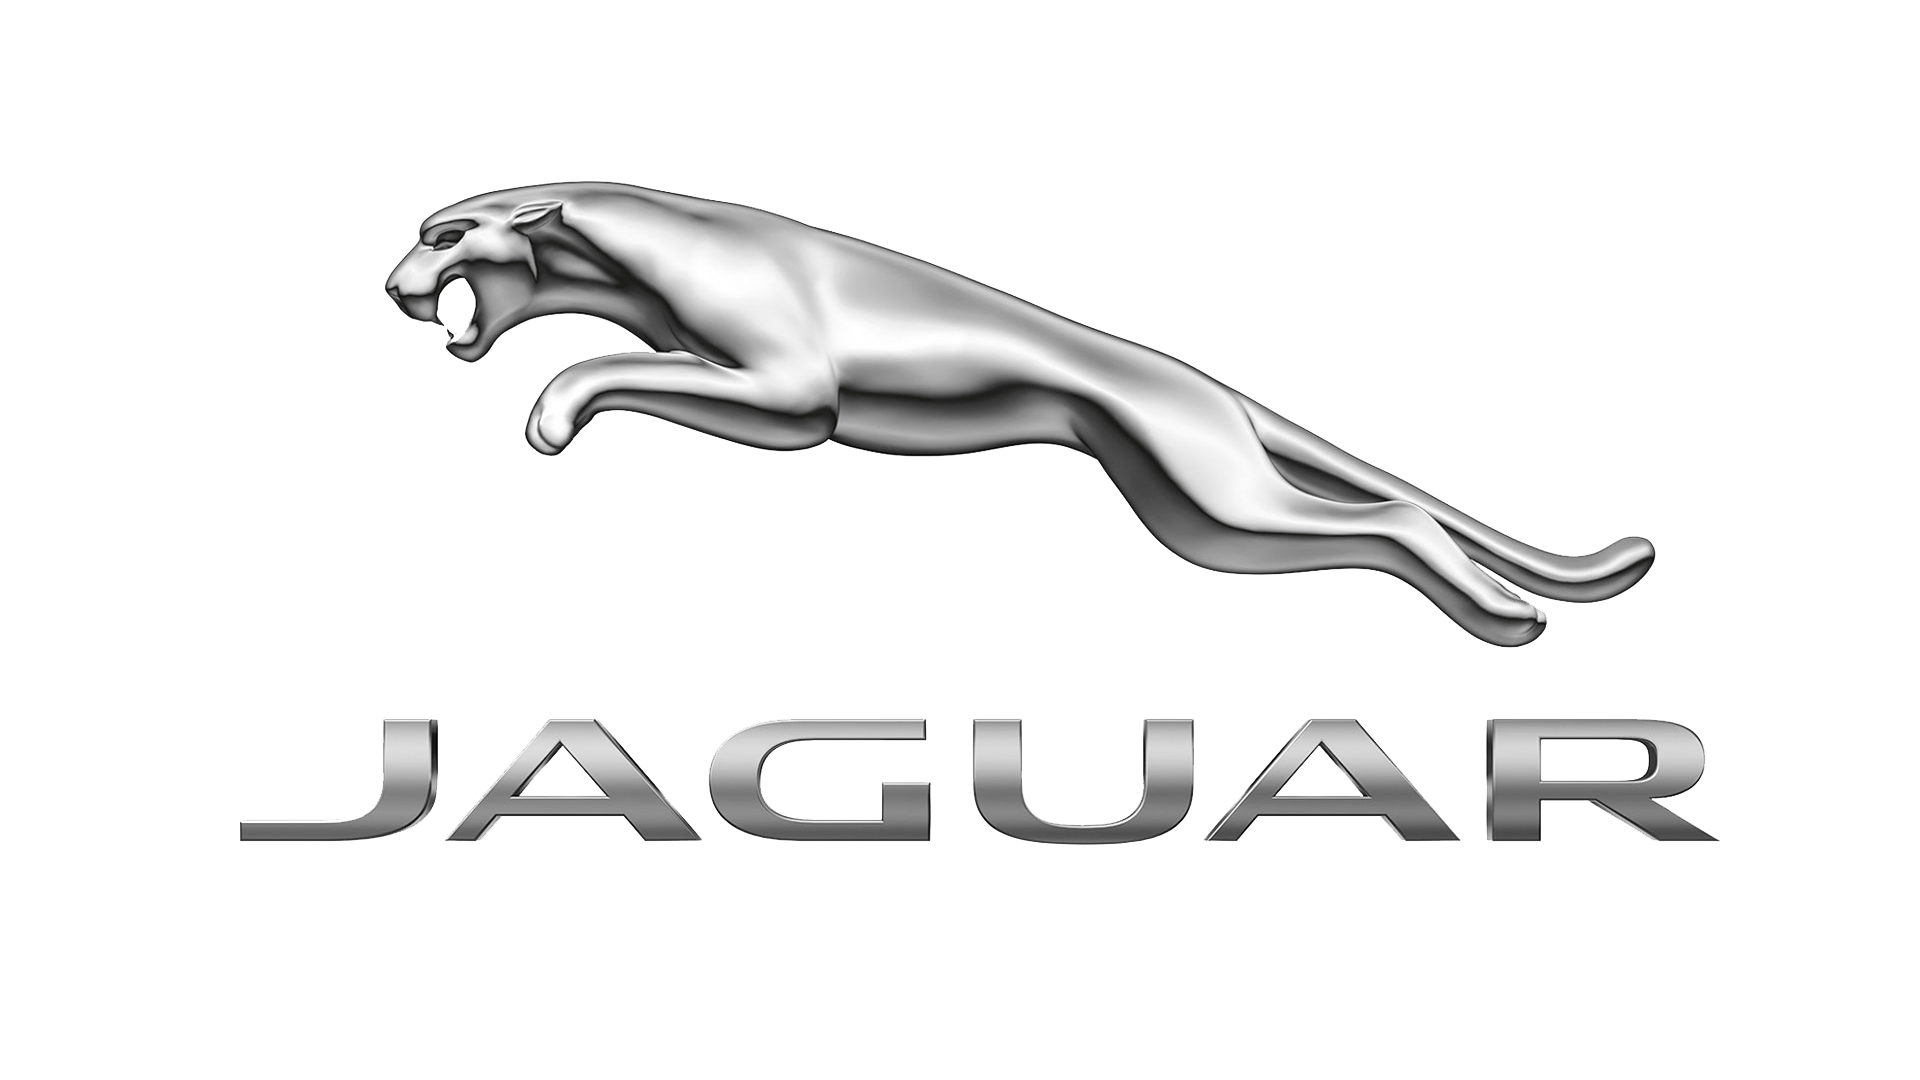 cougar clipart jaguar